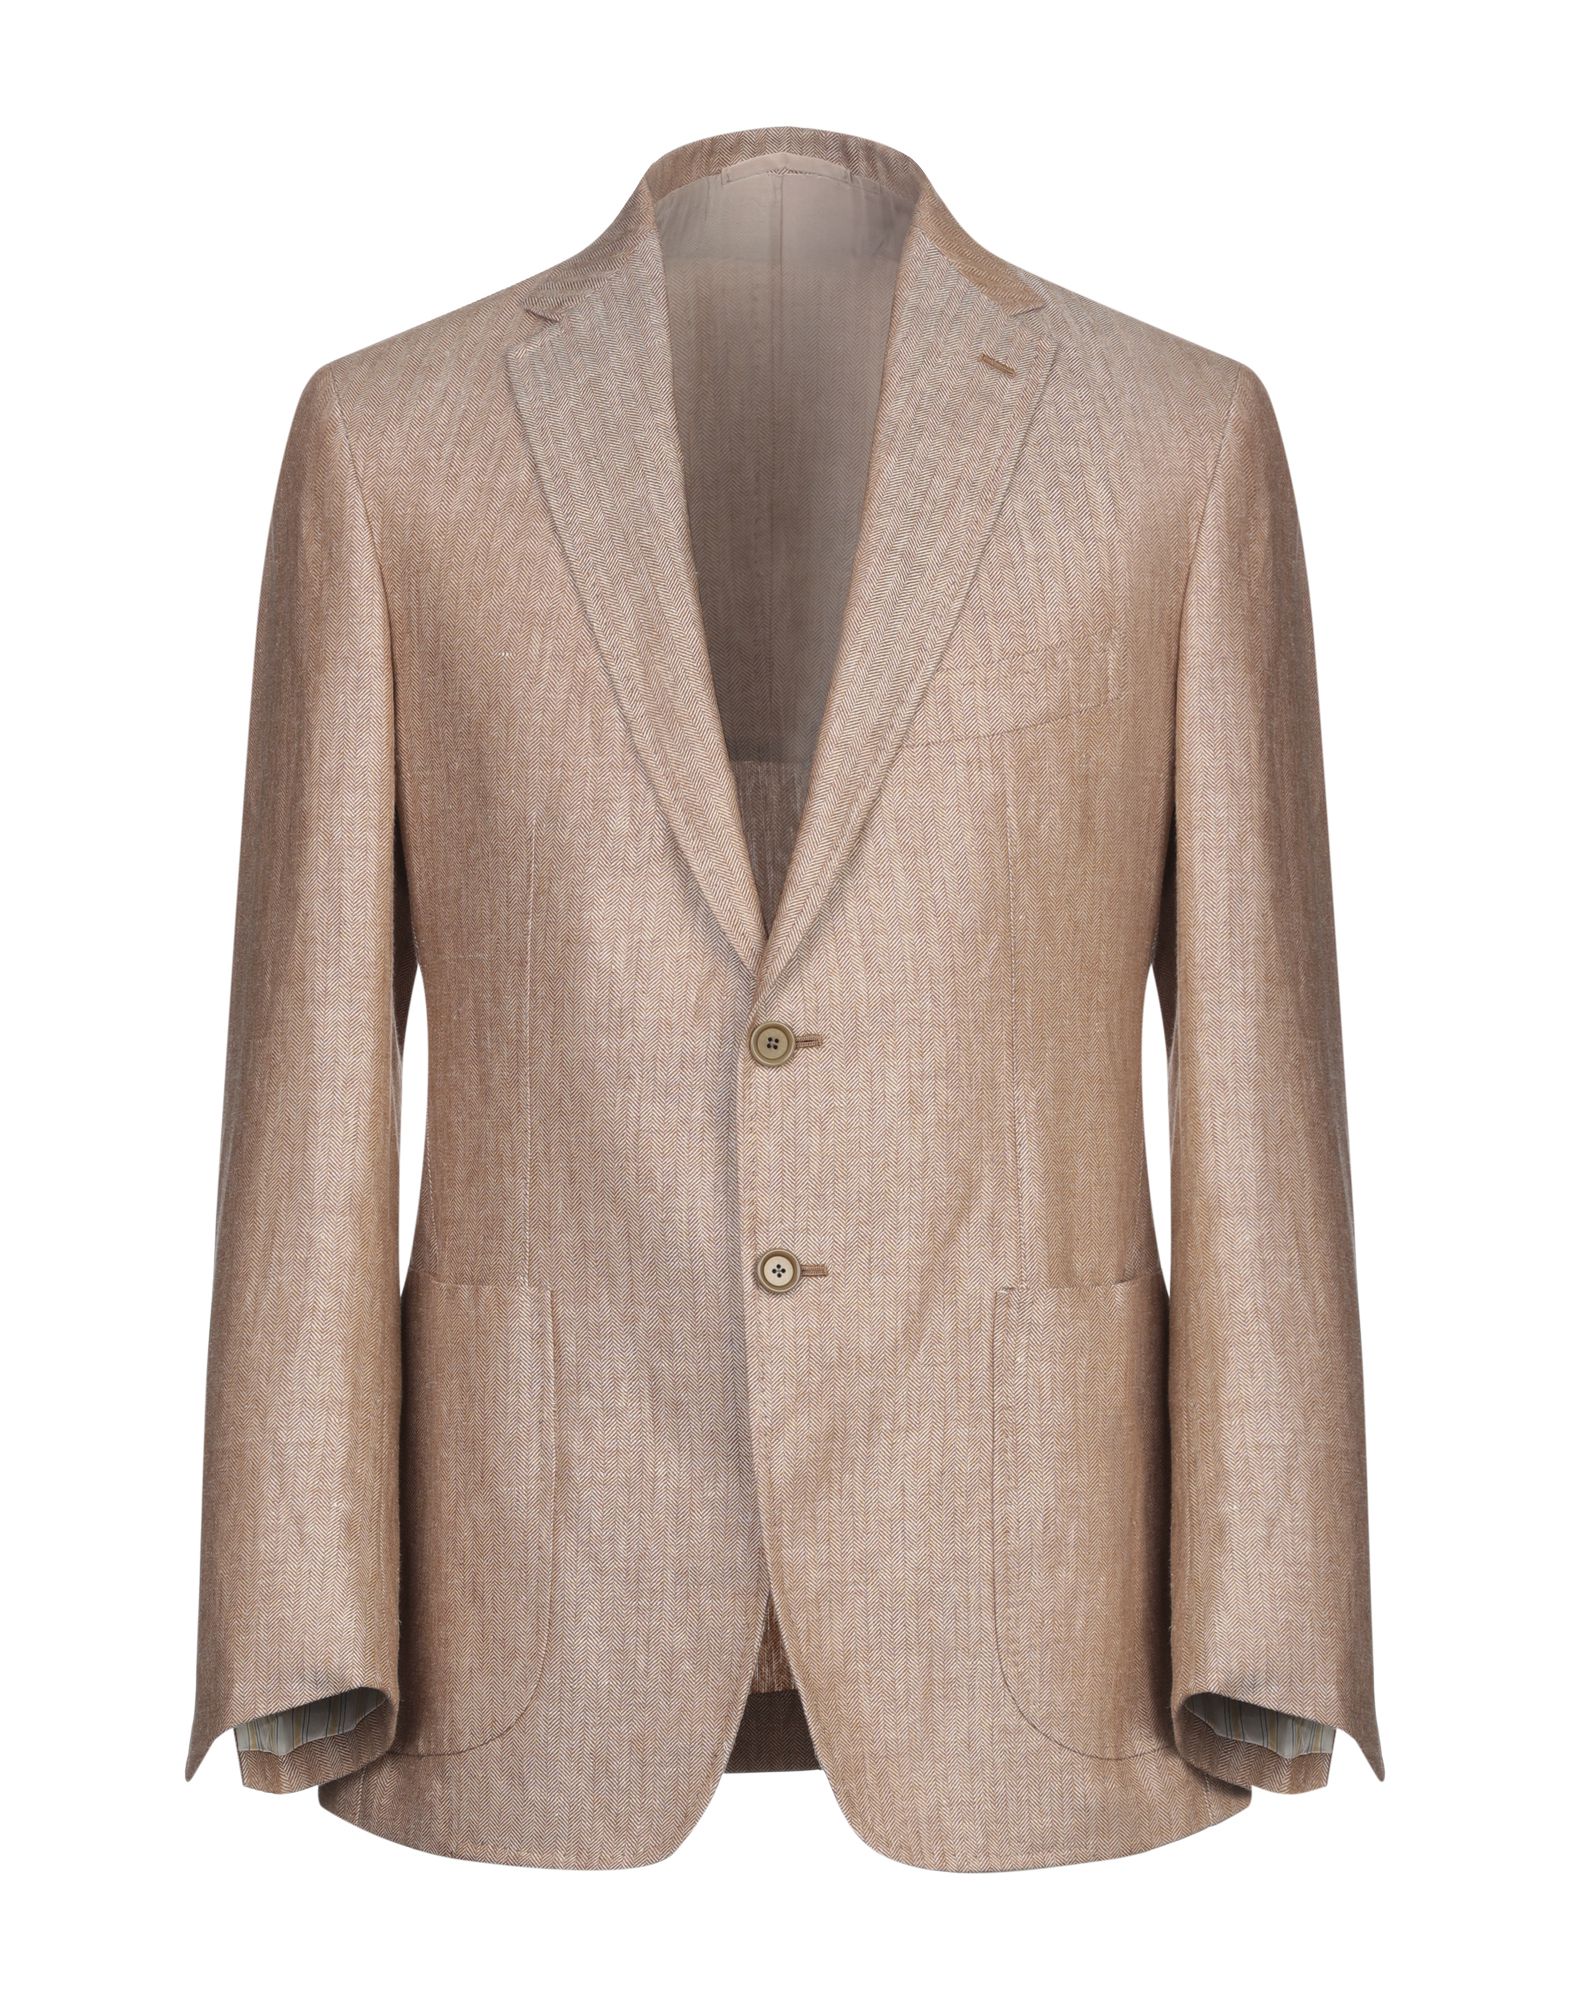 SARTORIA CAVALIERE Napoli Suit jackets